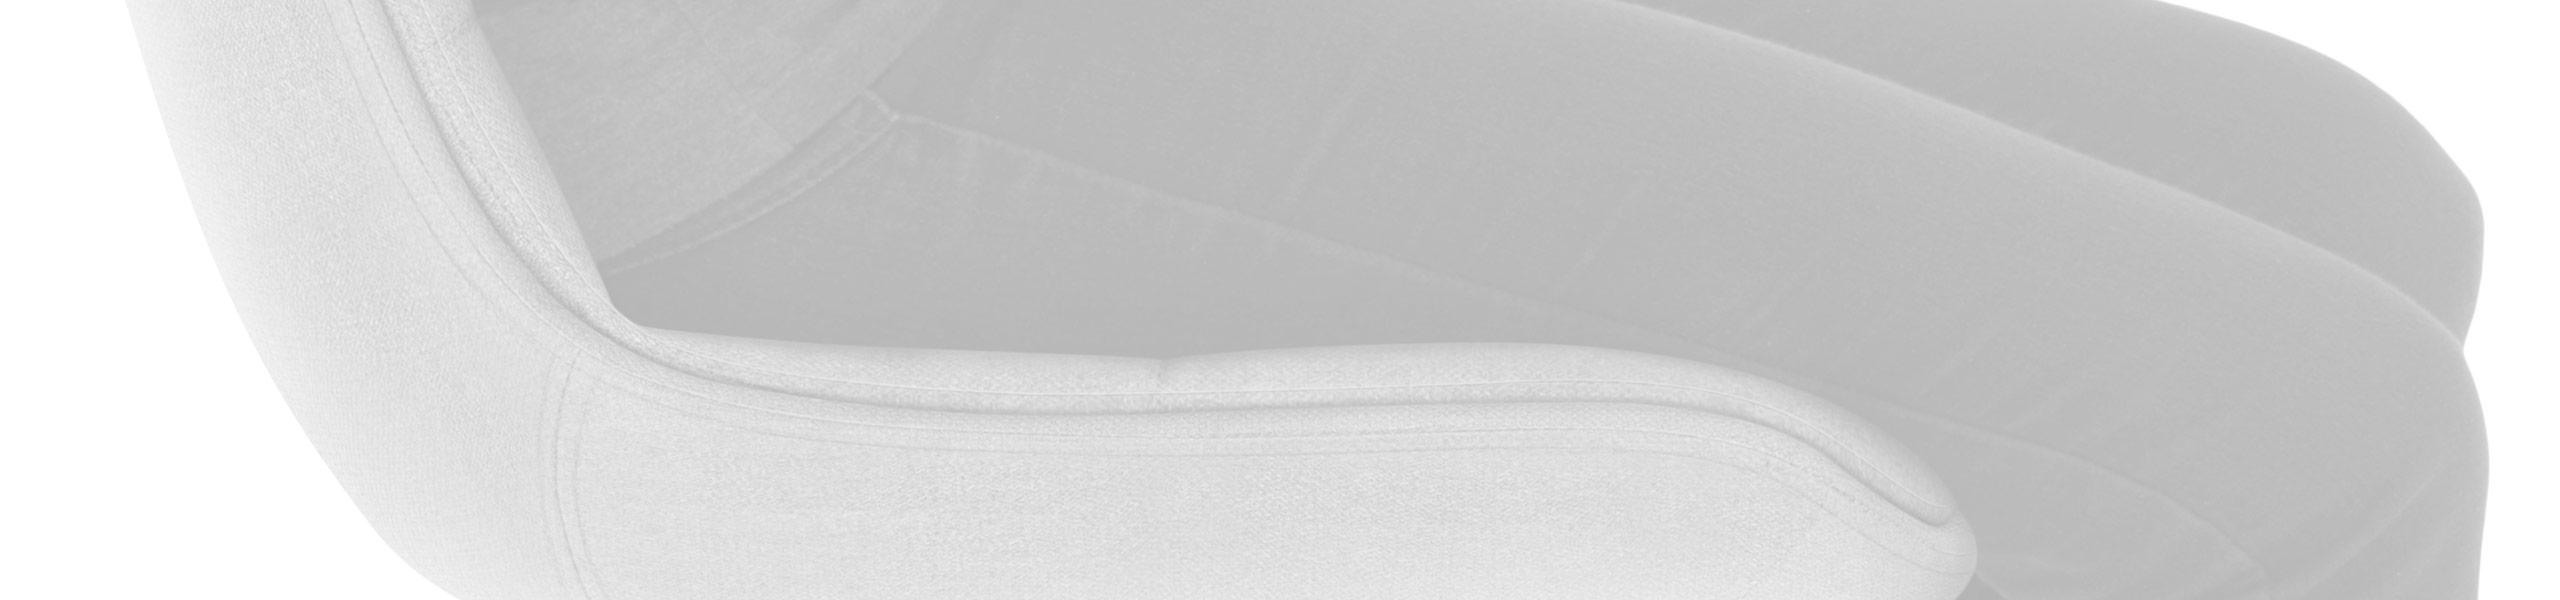 Lattice Stool Grey Fabric Review Banner